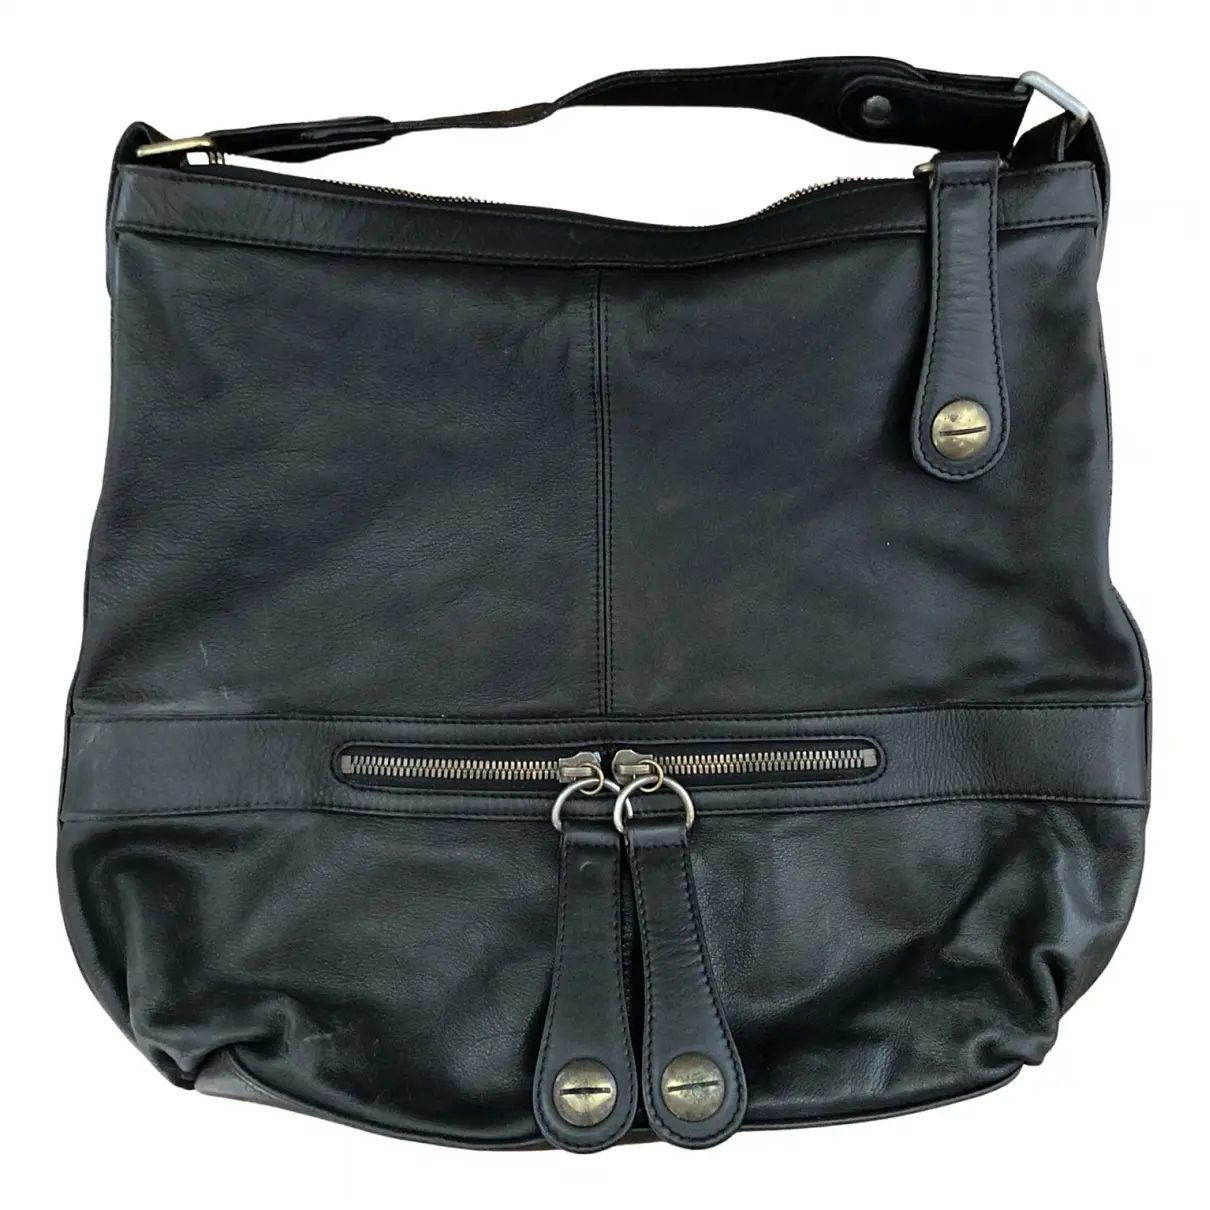 Midday Midnight leather handbag Gerard Darel